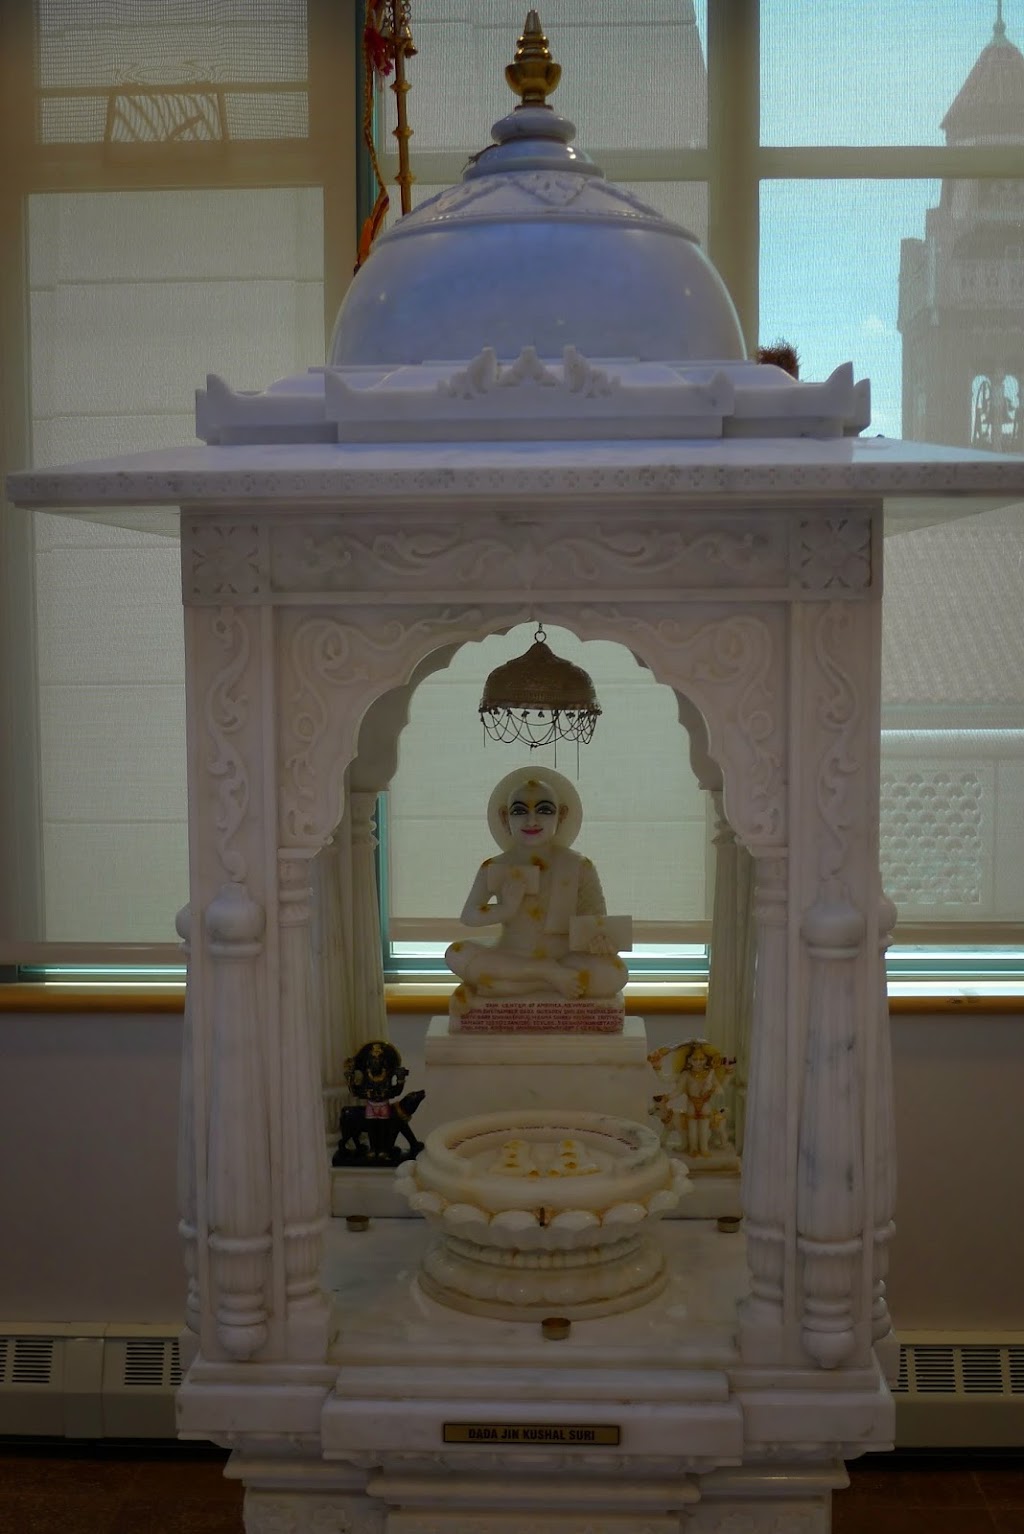 Jain Center of America | 43-11 Ithaca St, Flushing, NY 11373, USA | Phone: (718) 478-9141